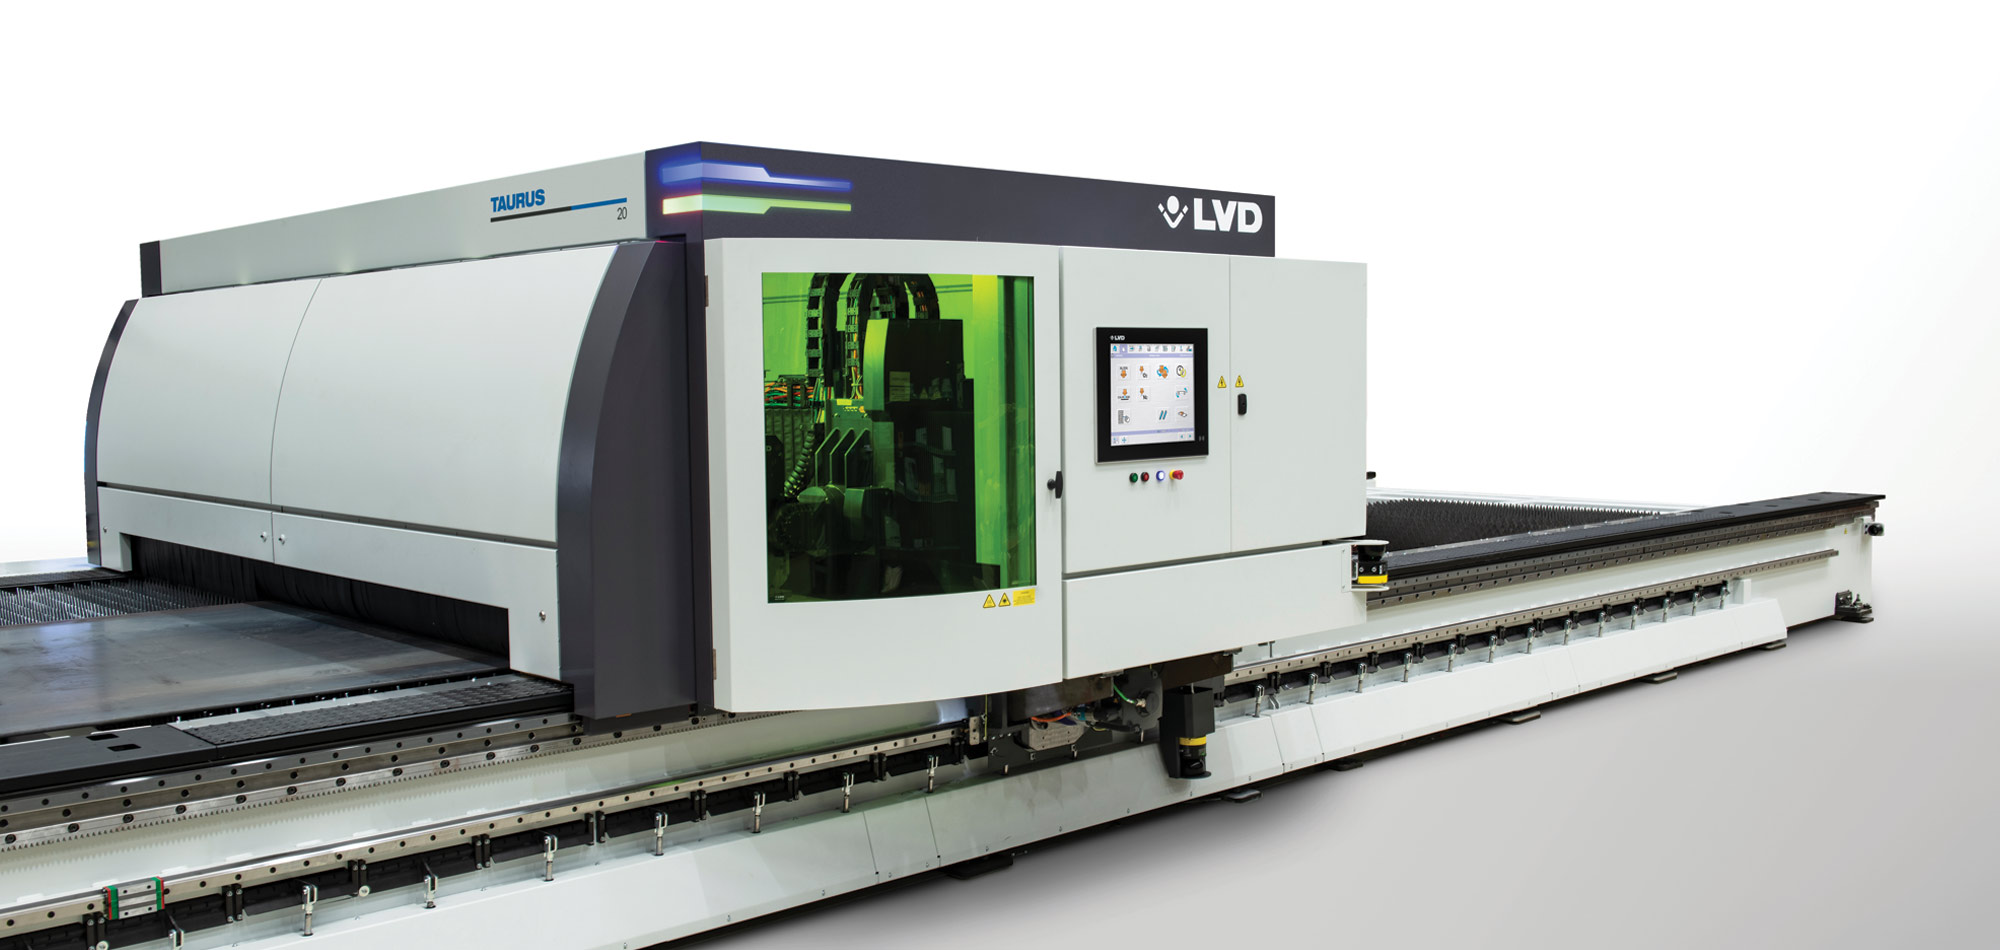 LVD’s Taurus fiber laser machine